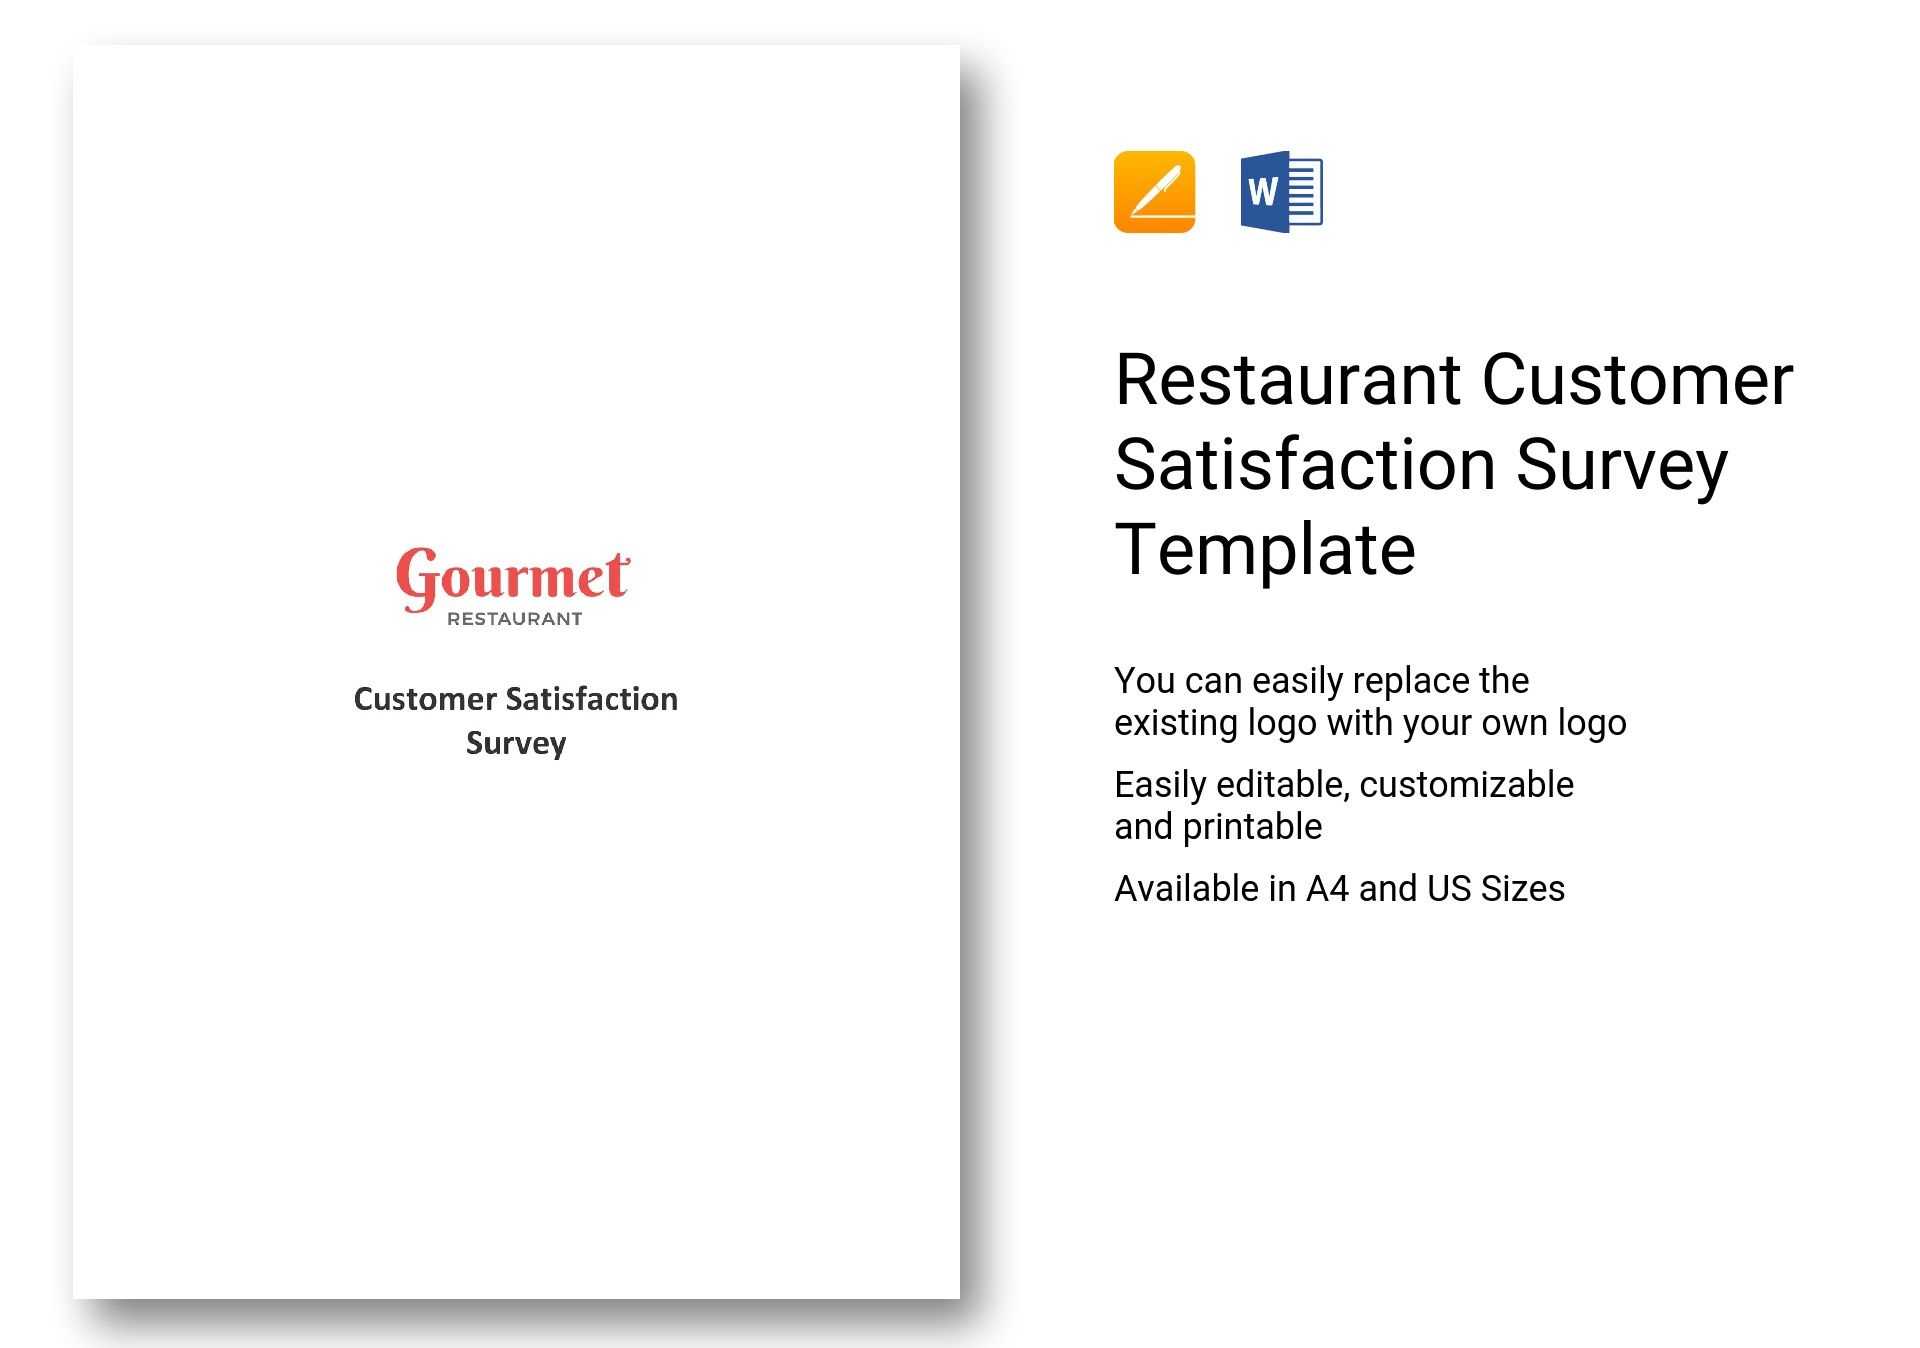 Restaurant Customer Satisfaction Survey Template In Word With Customer Satisfaction Report Template